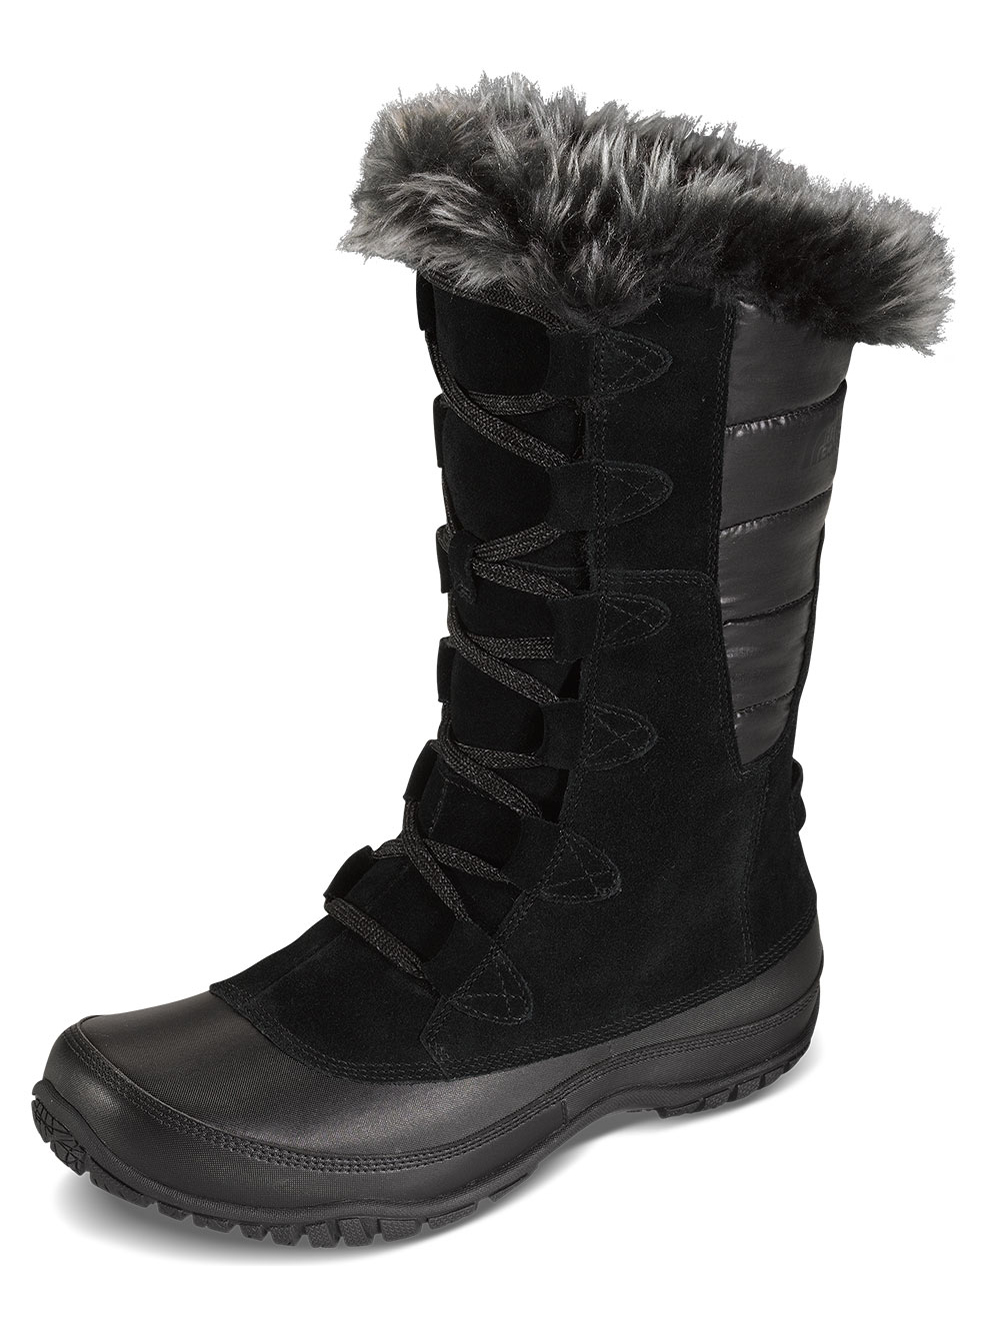 north face nuptse fur boots womens